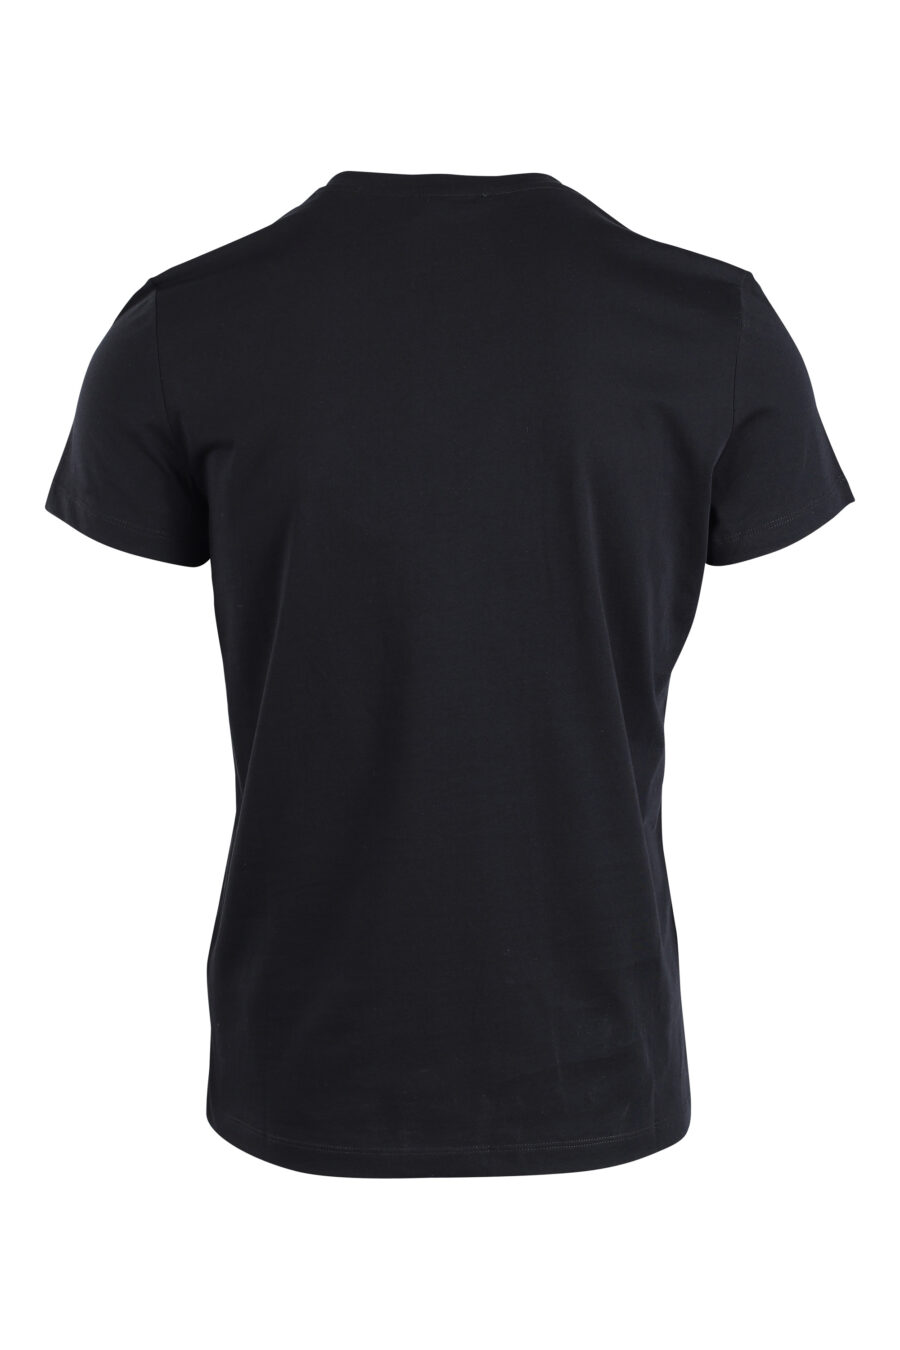 Black T-shirt with silver maxilogo "paris" - IMG 2590